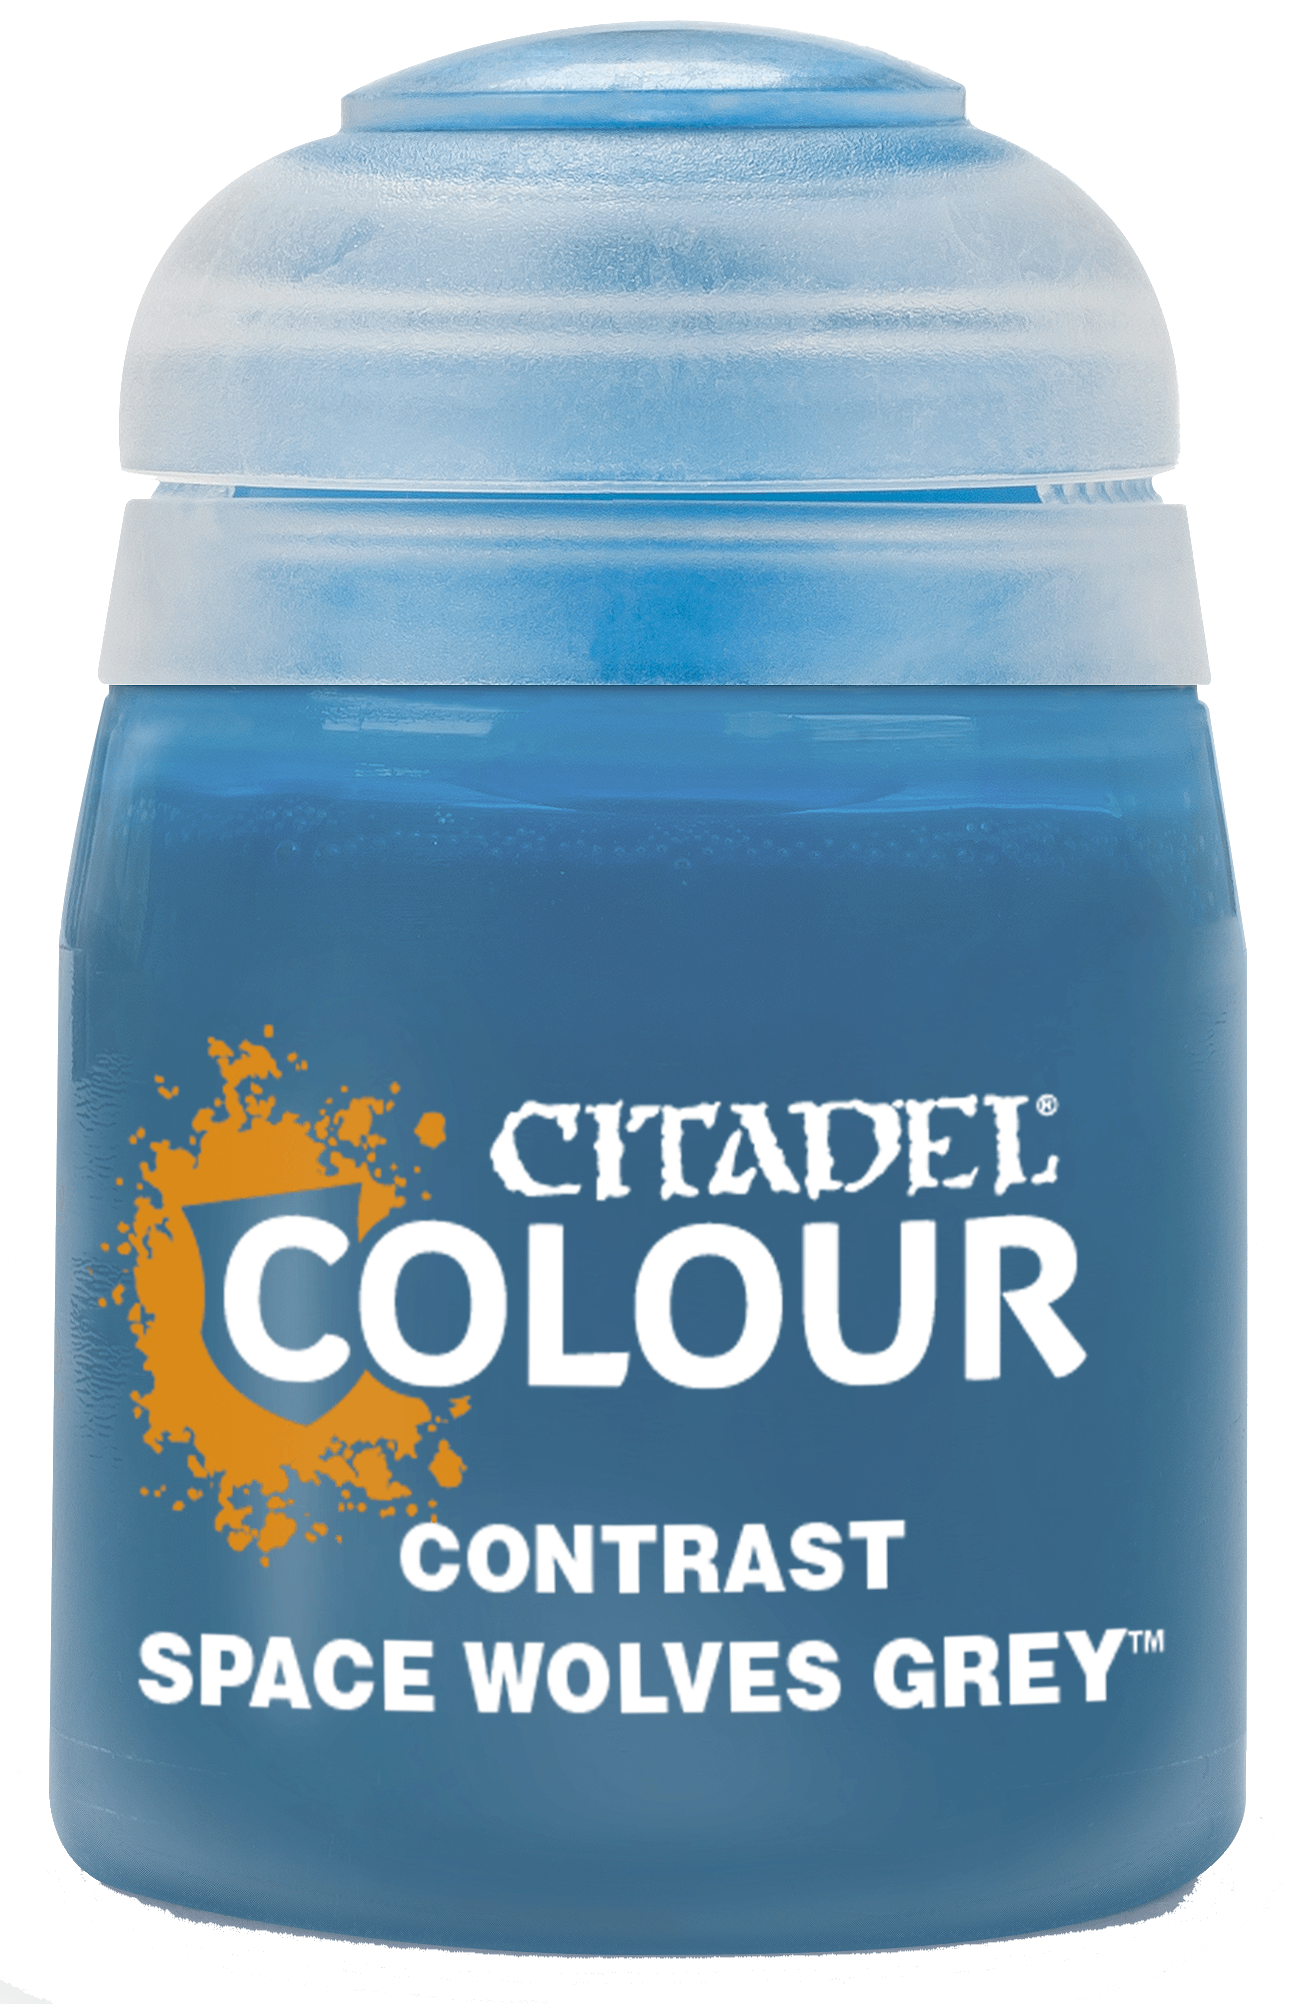 Citadel Colour: Contrast - Space Wolves Grey